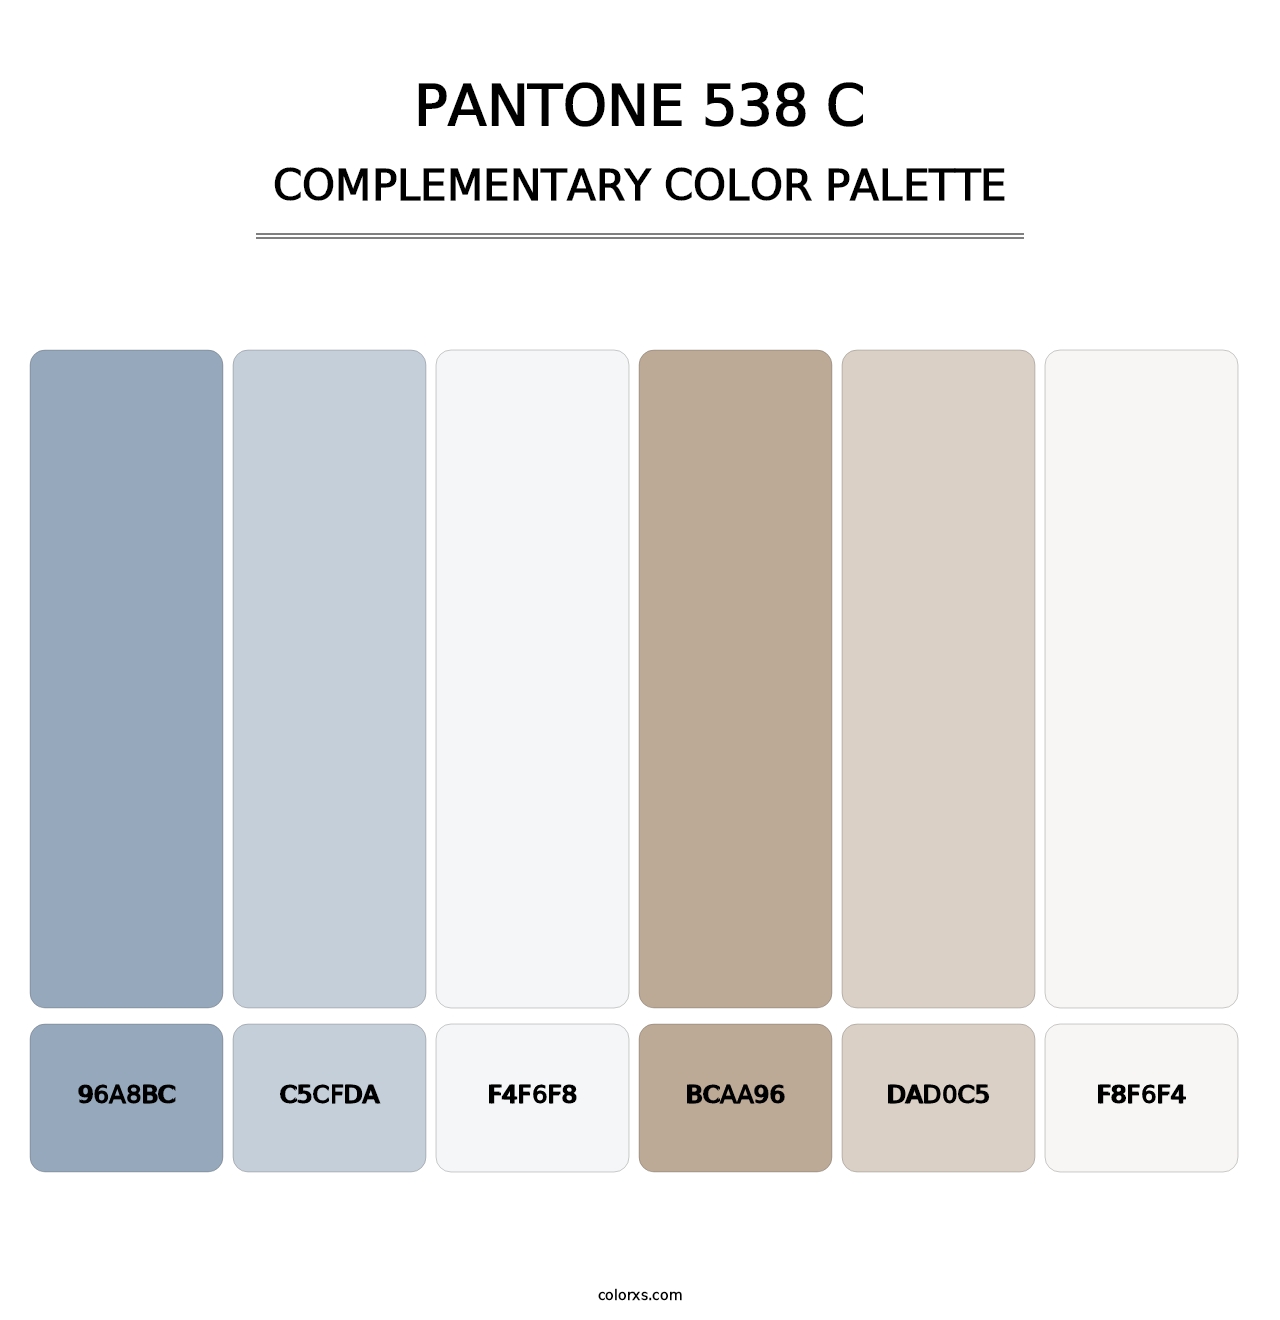 PANTONE 538 C - Complementary Color Palette